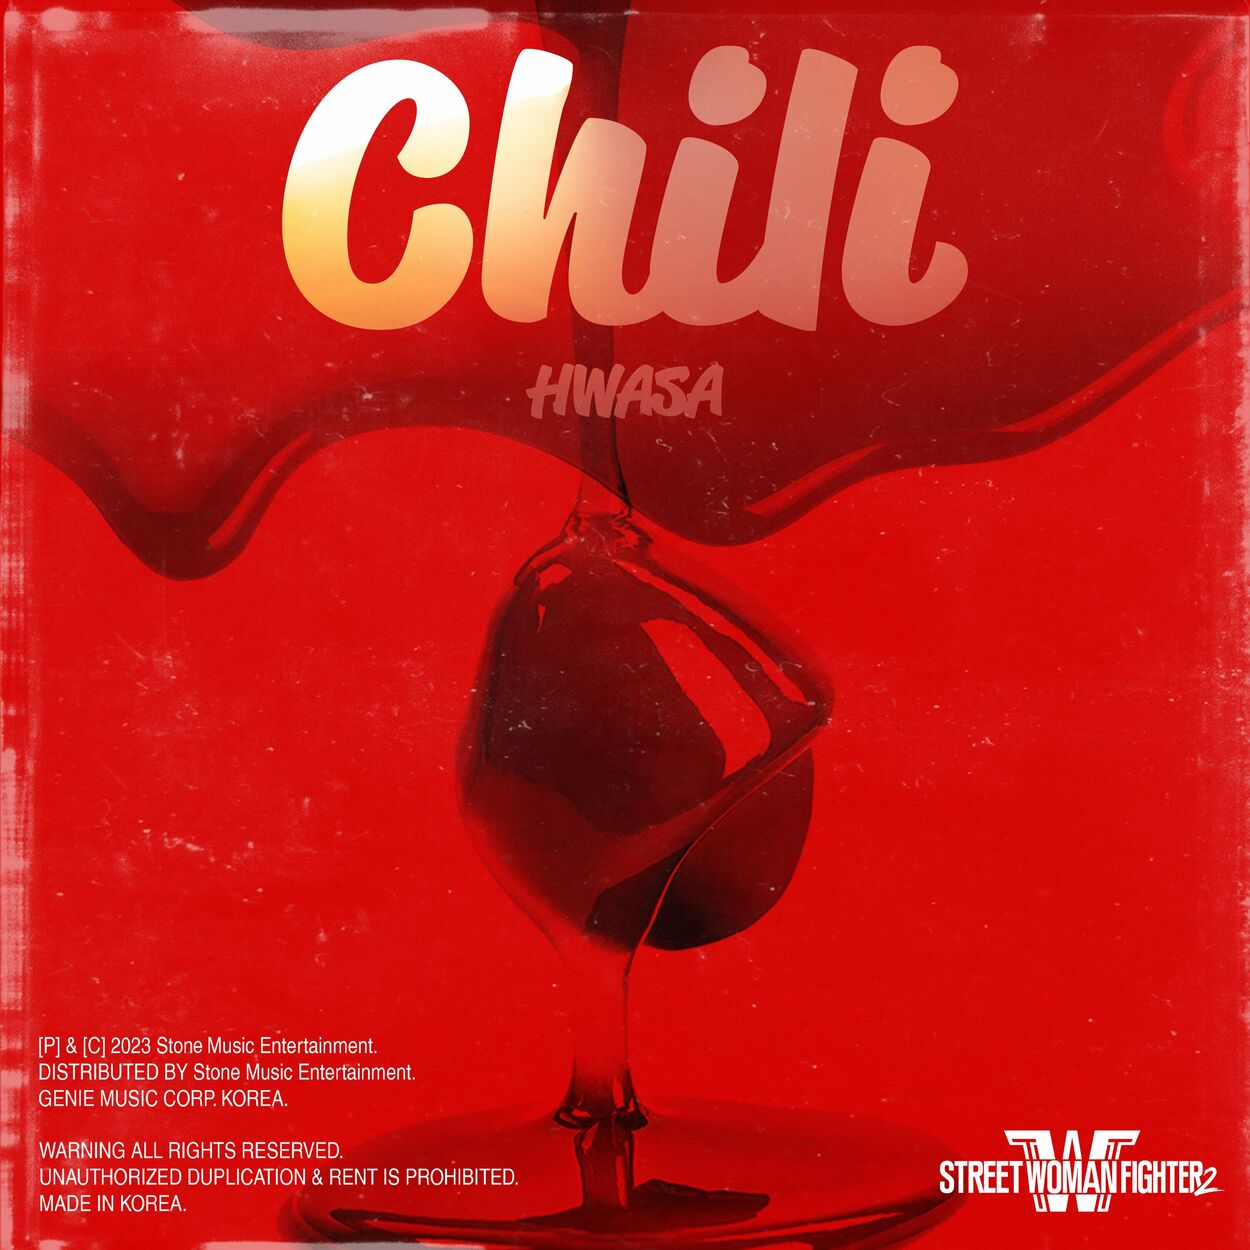 HWASA – Chili – Single